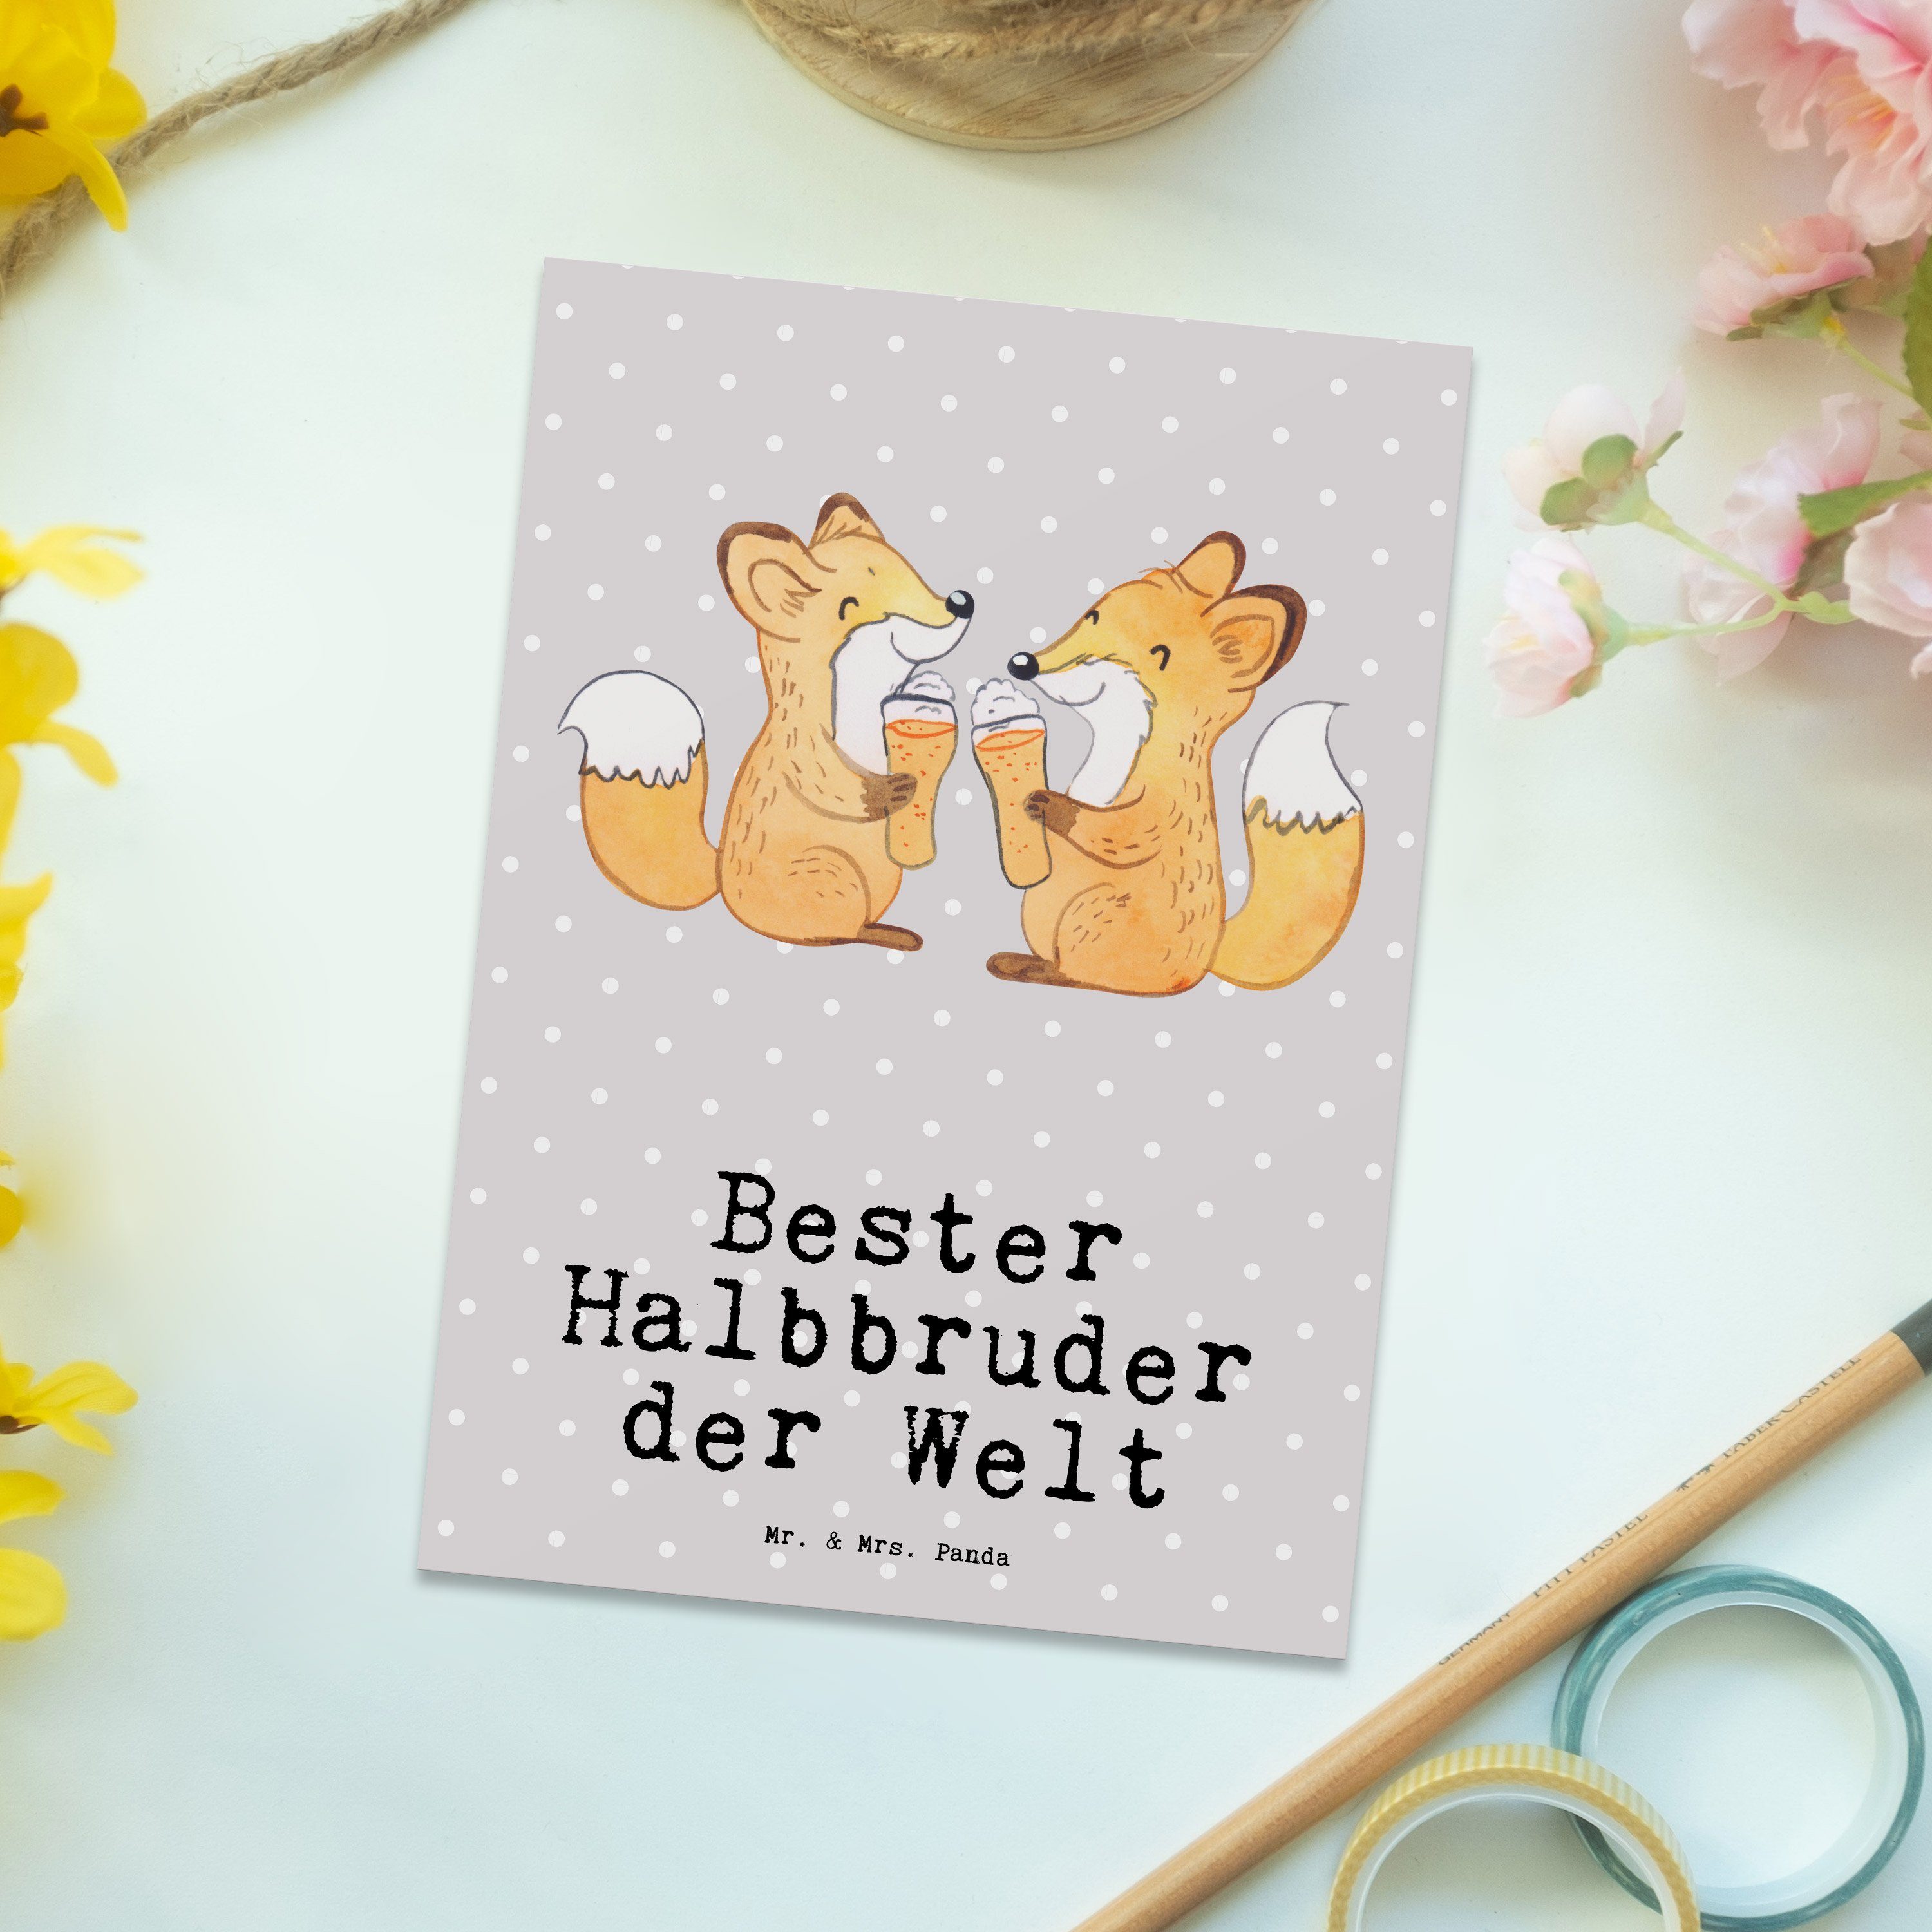 Mr. & Geschenk, Fuchs Bester Panda - Mrs. Welt der Grau Pastell Postkarte Halbbruder - Dankeskar